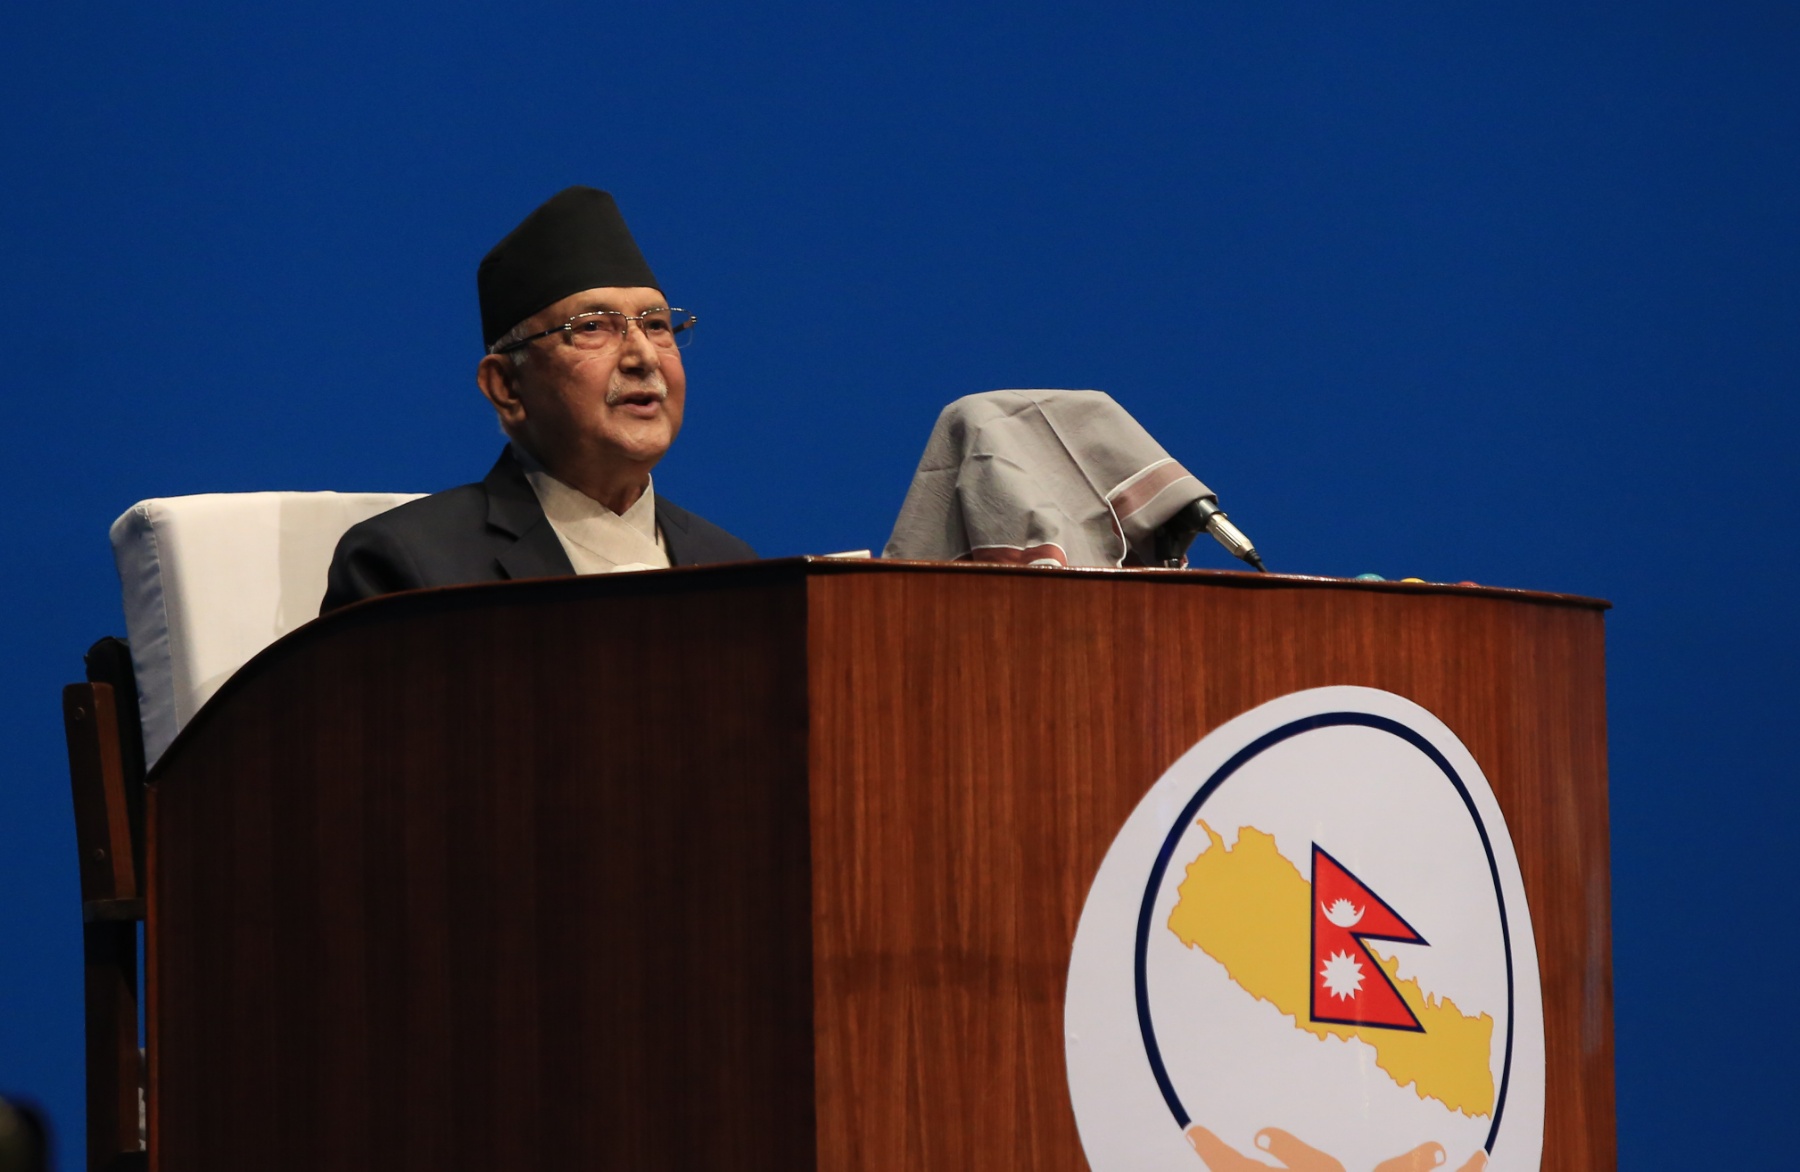 India encroaching Nepali territory by stationing its army in Kalapani region: PM Oli